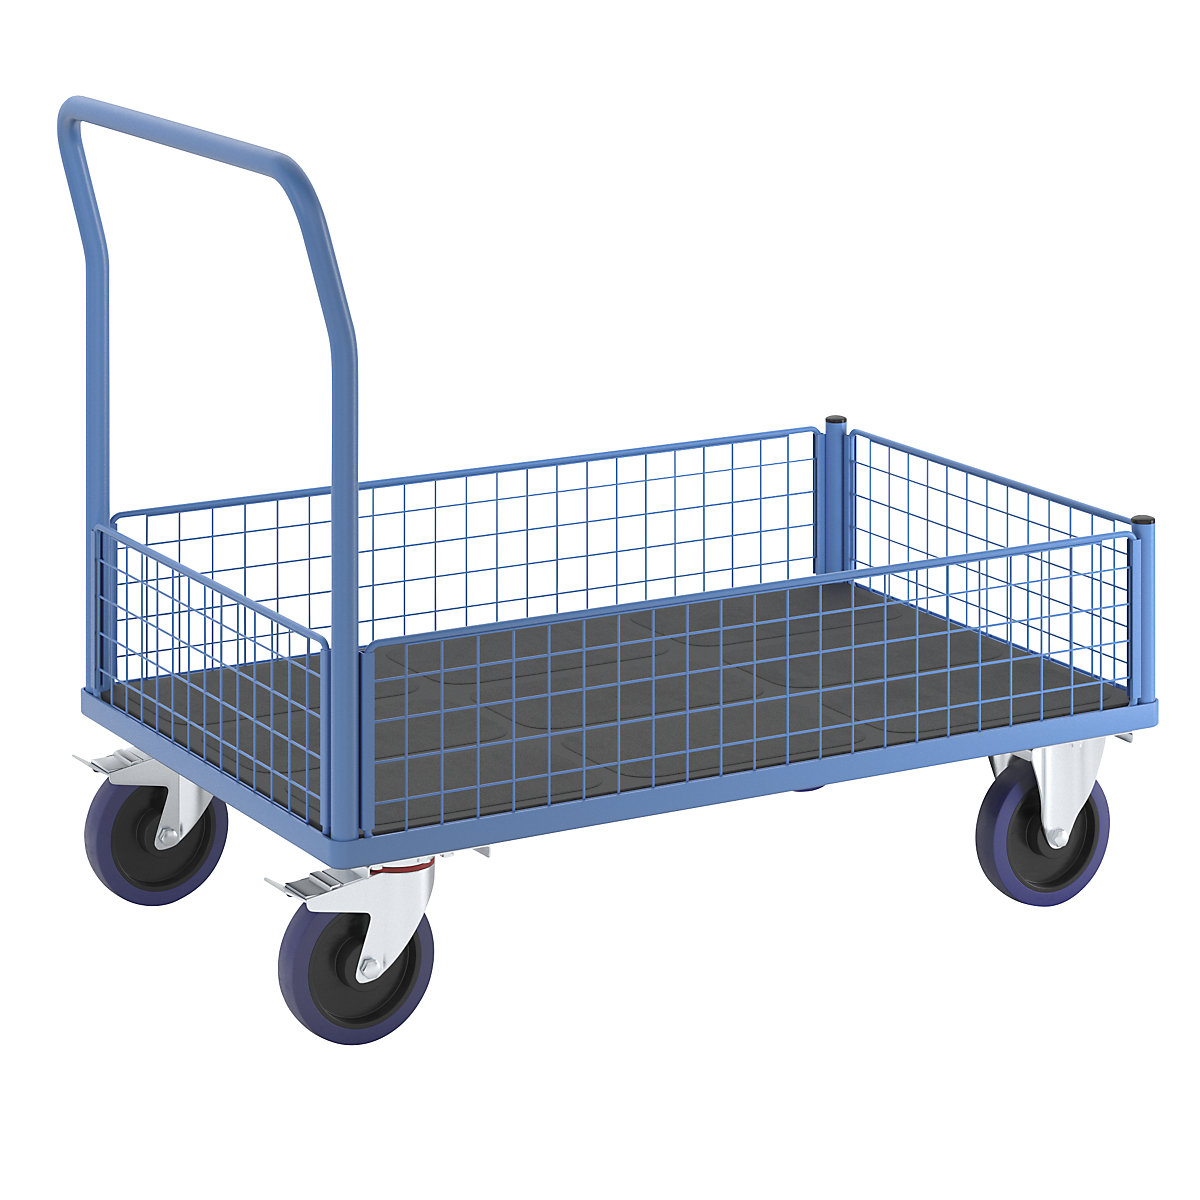 Plošinový vozík s mřížkami v poloviční výšce - eurokraft pro